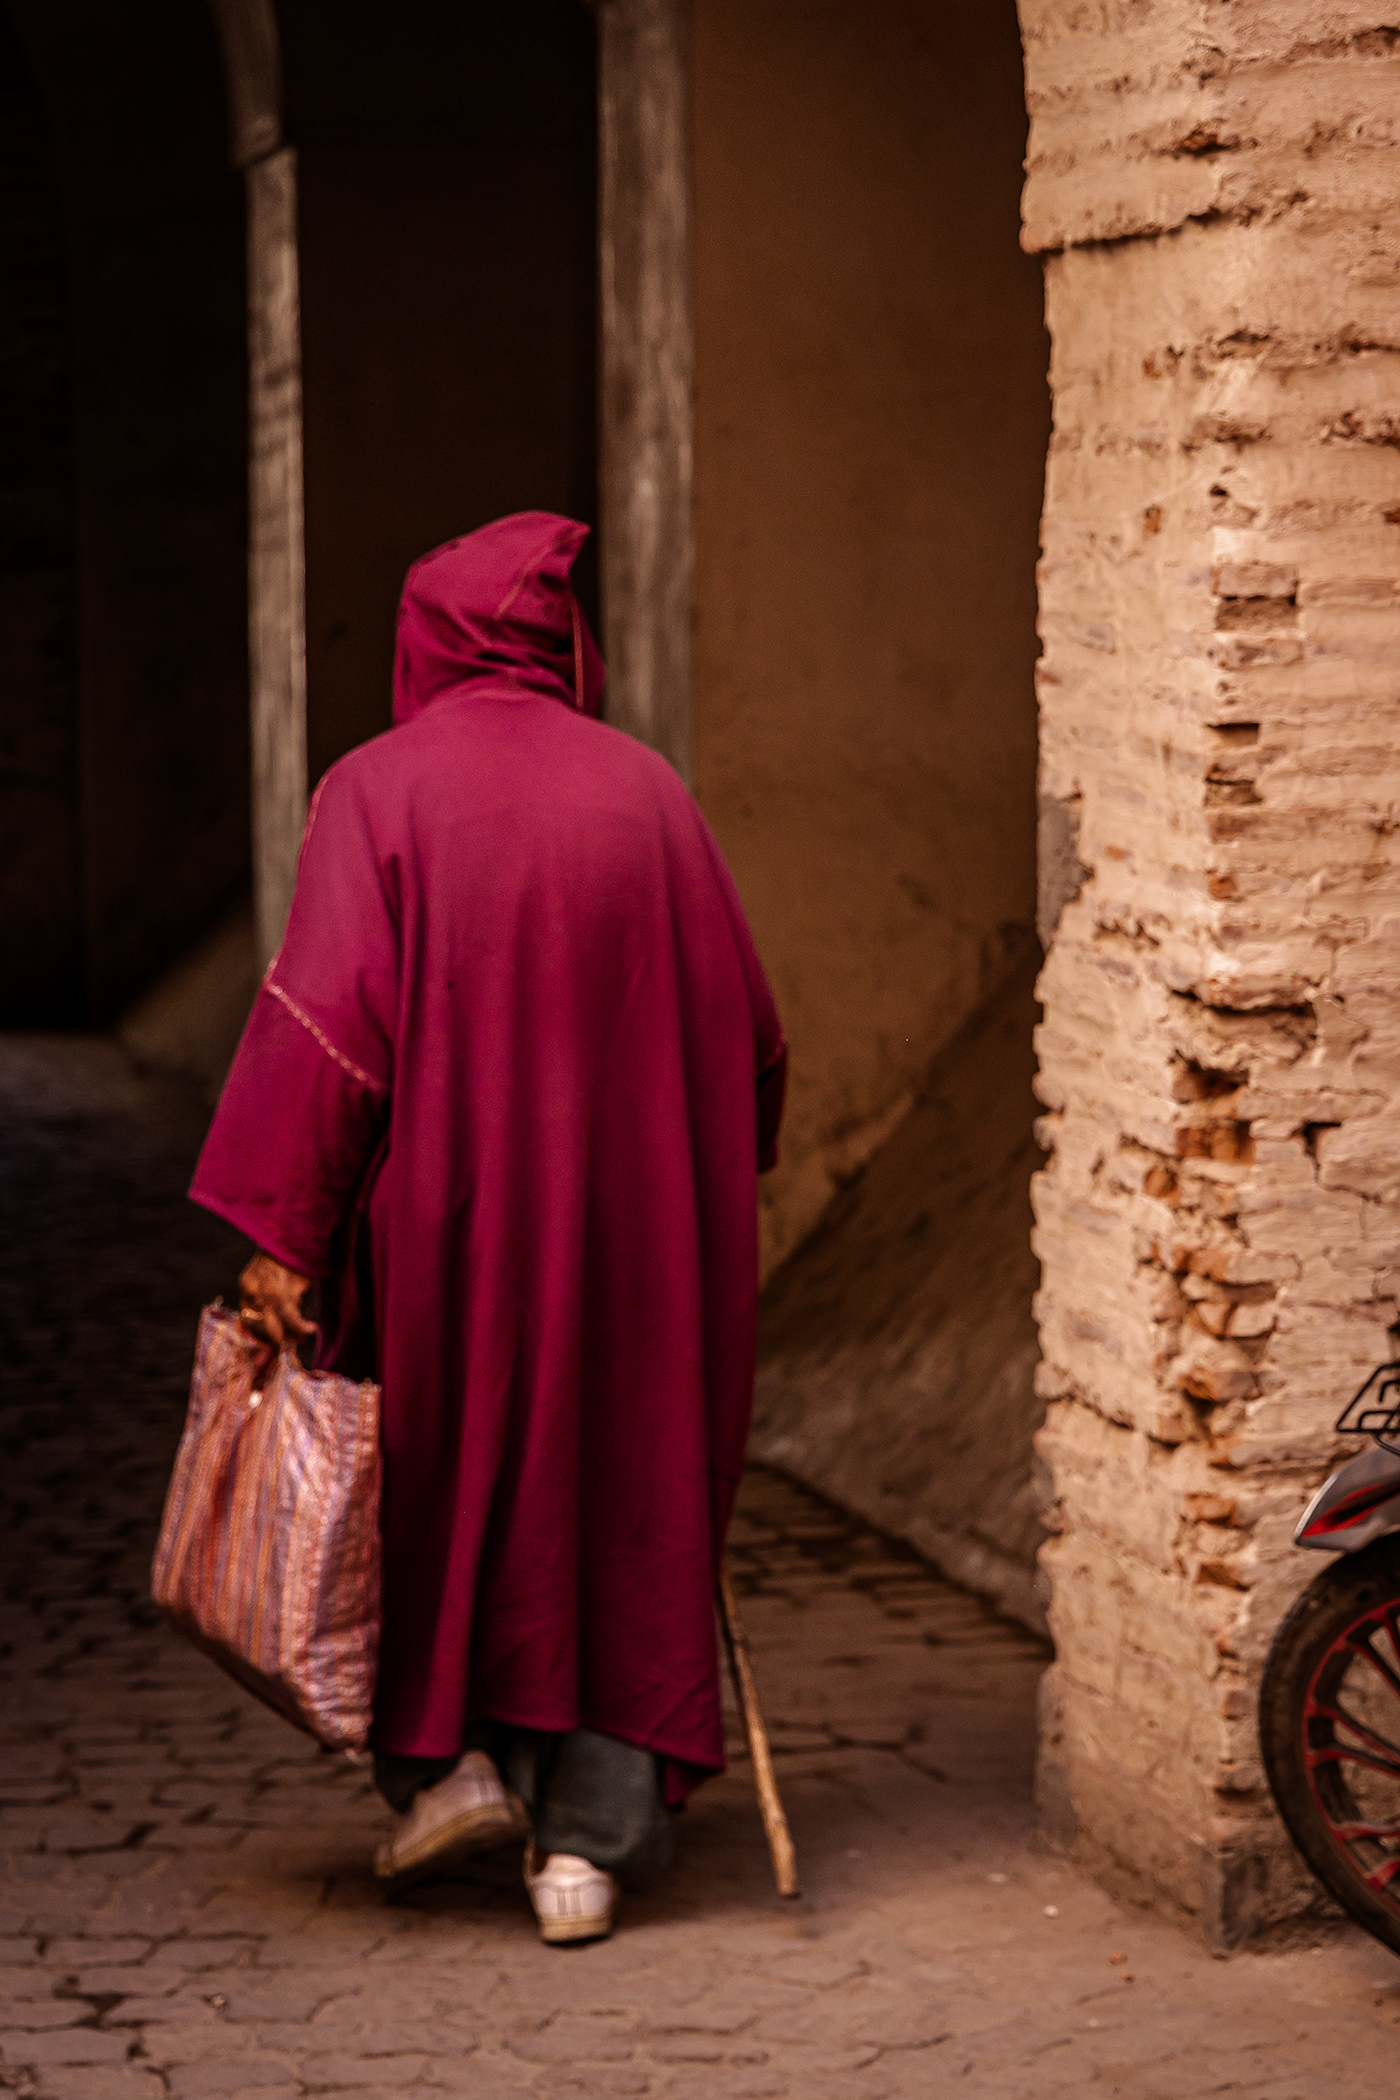 Morocco marocco Travel Photography  photographer portrait photoshoot Canon Photography Street tarvelphotography